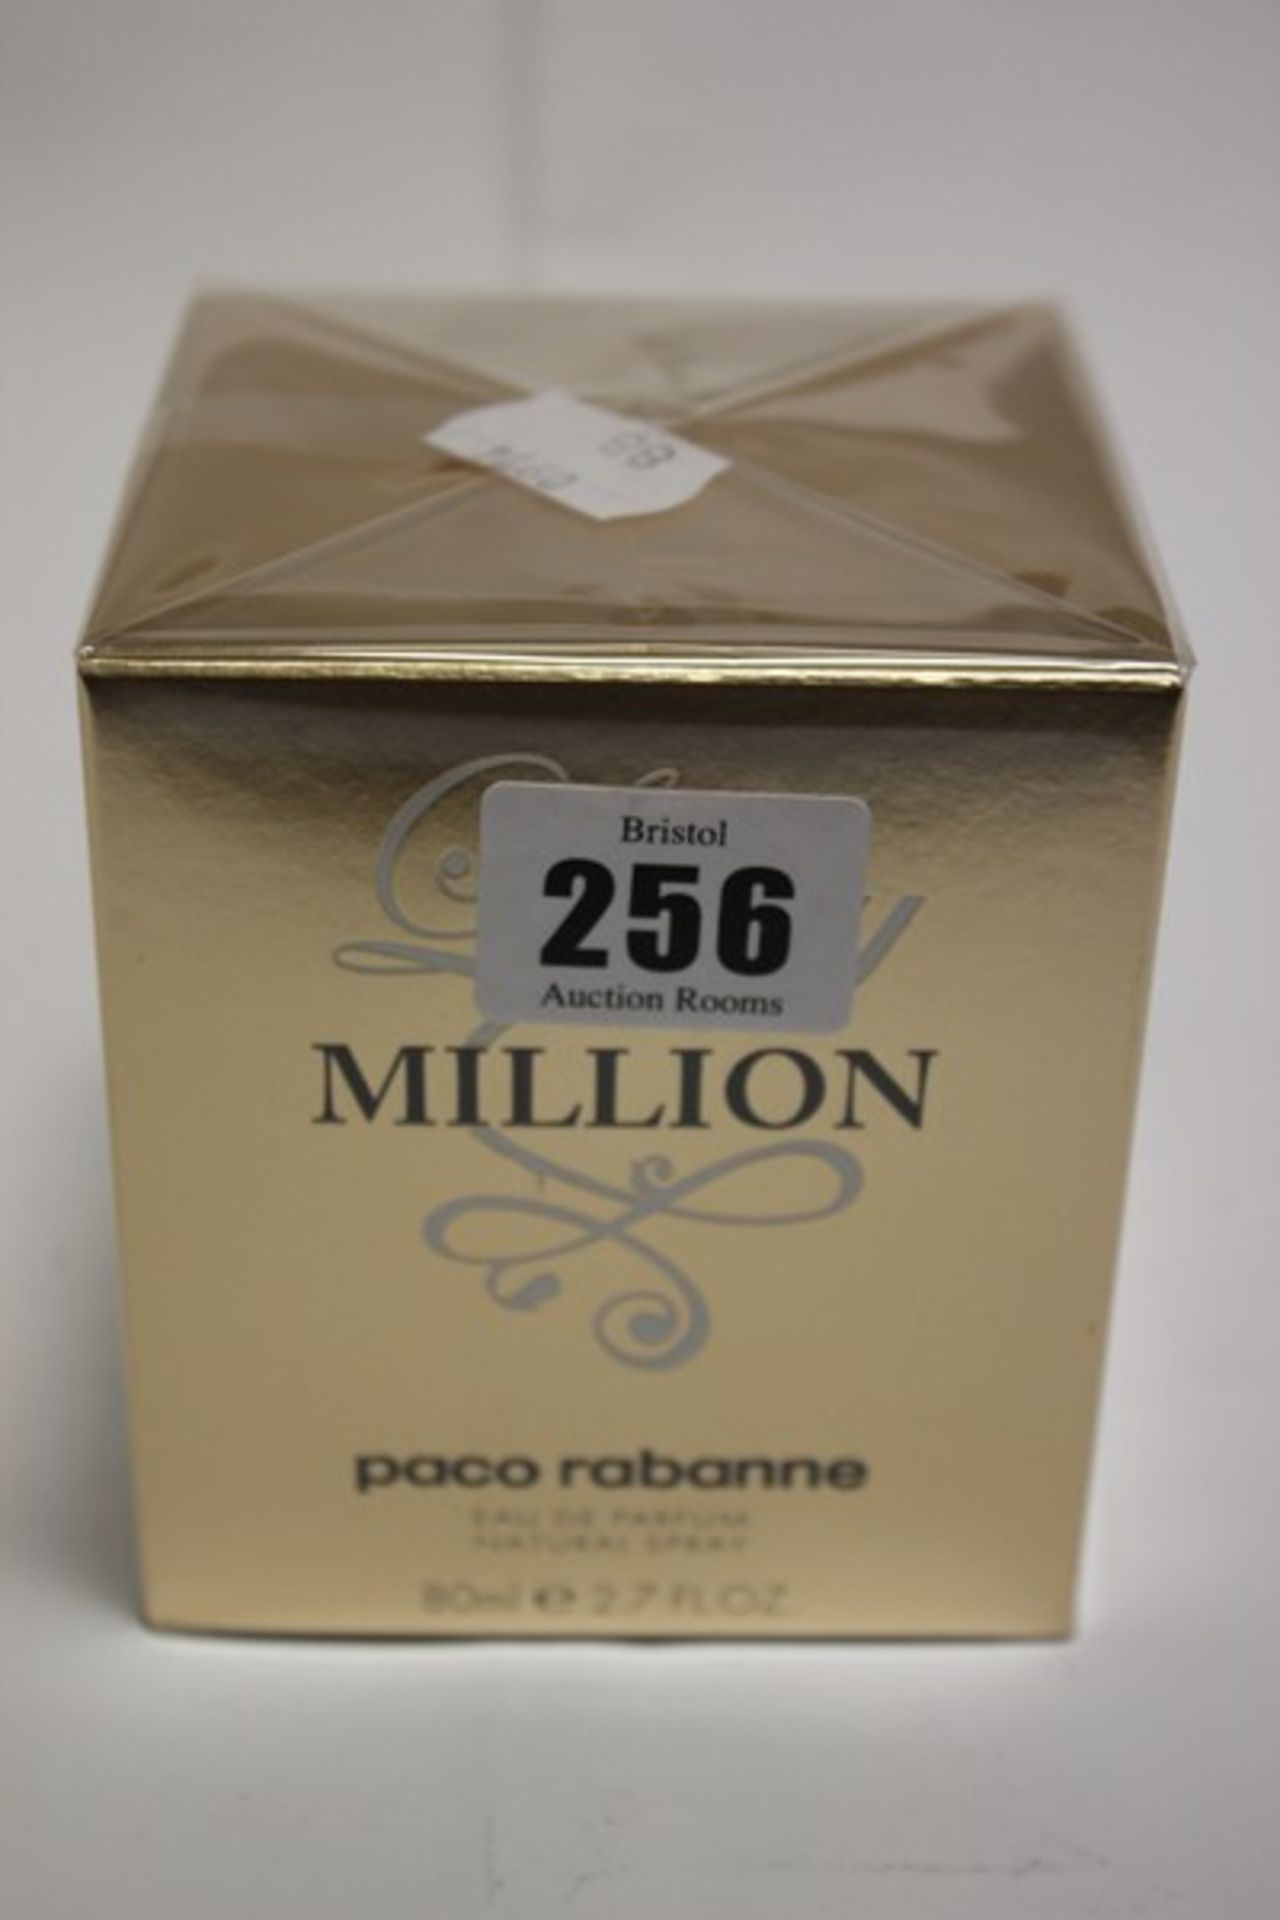 Three Paco Rabanne Lady Million eau de parfum (80ml).